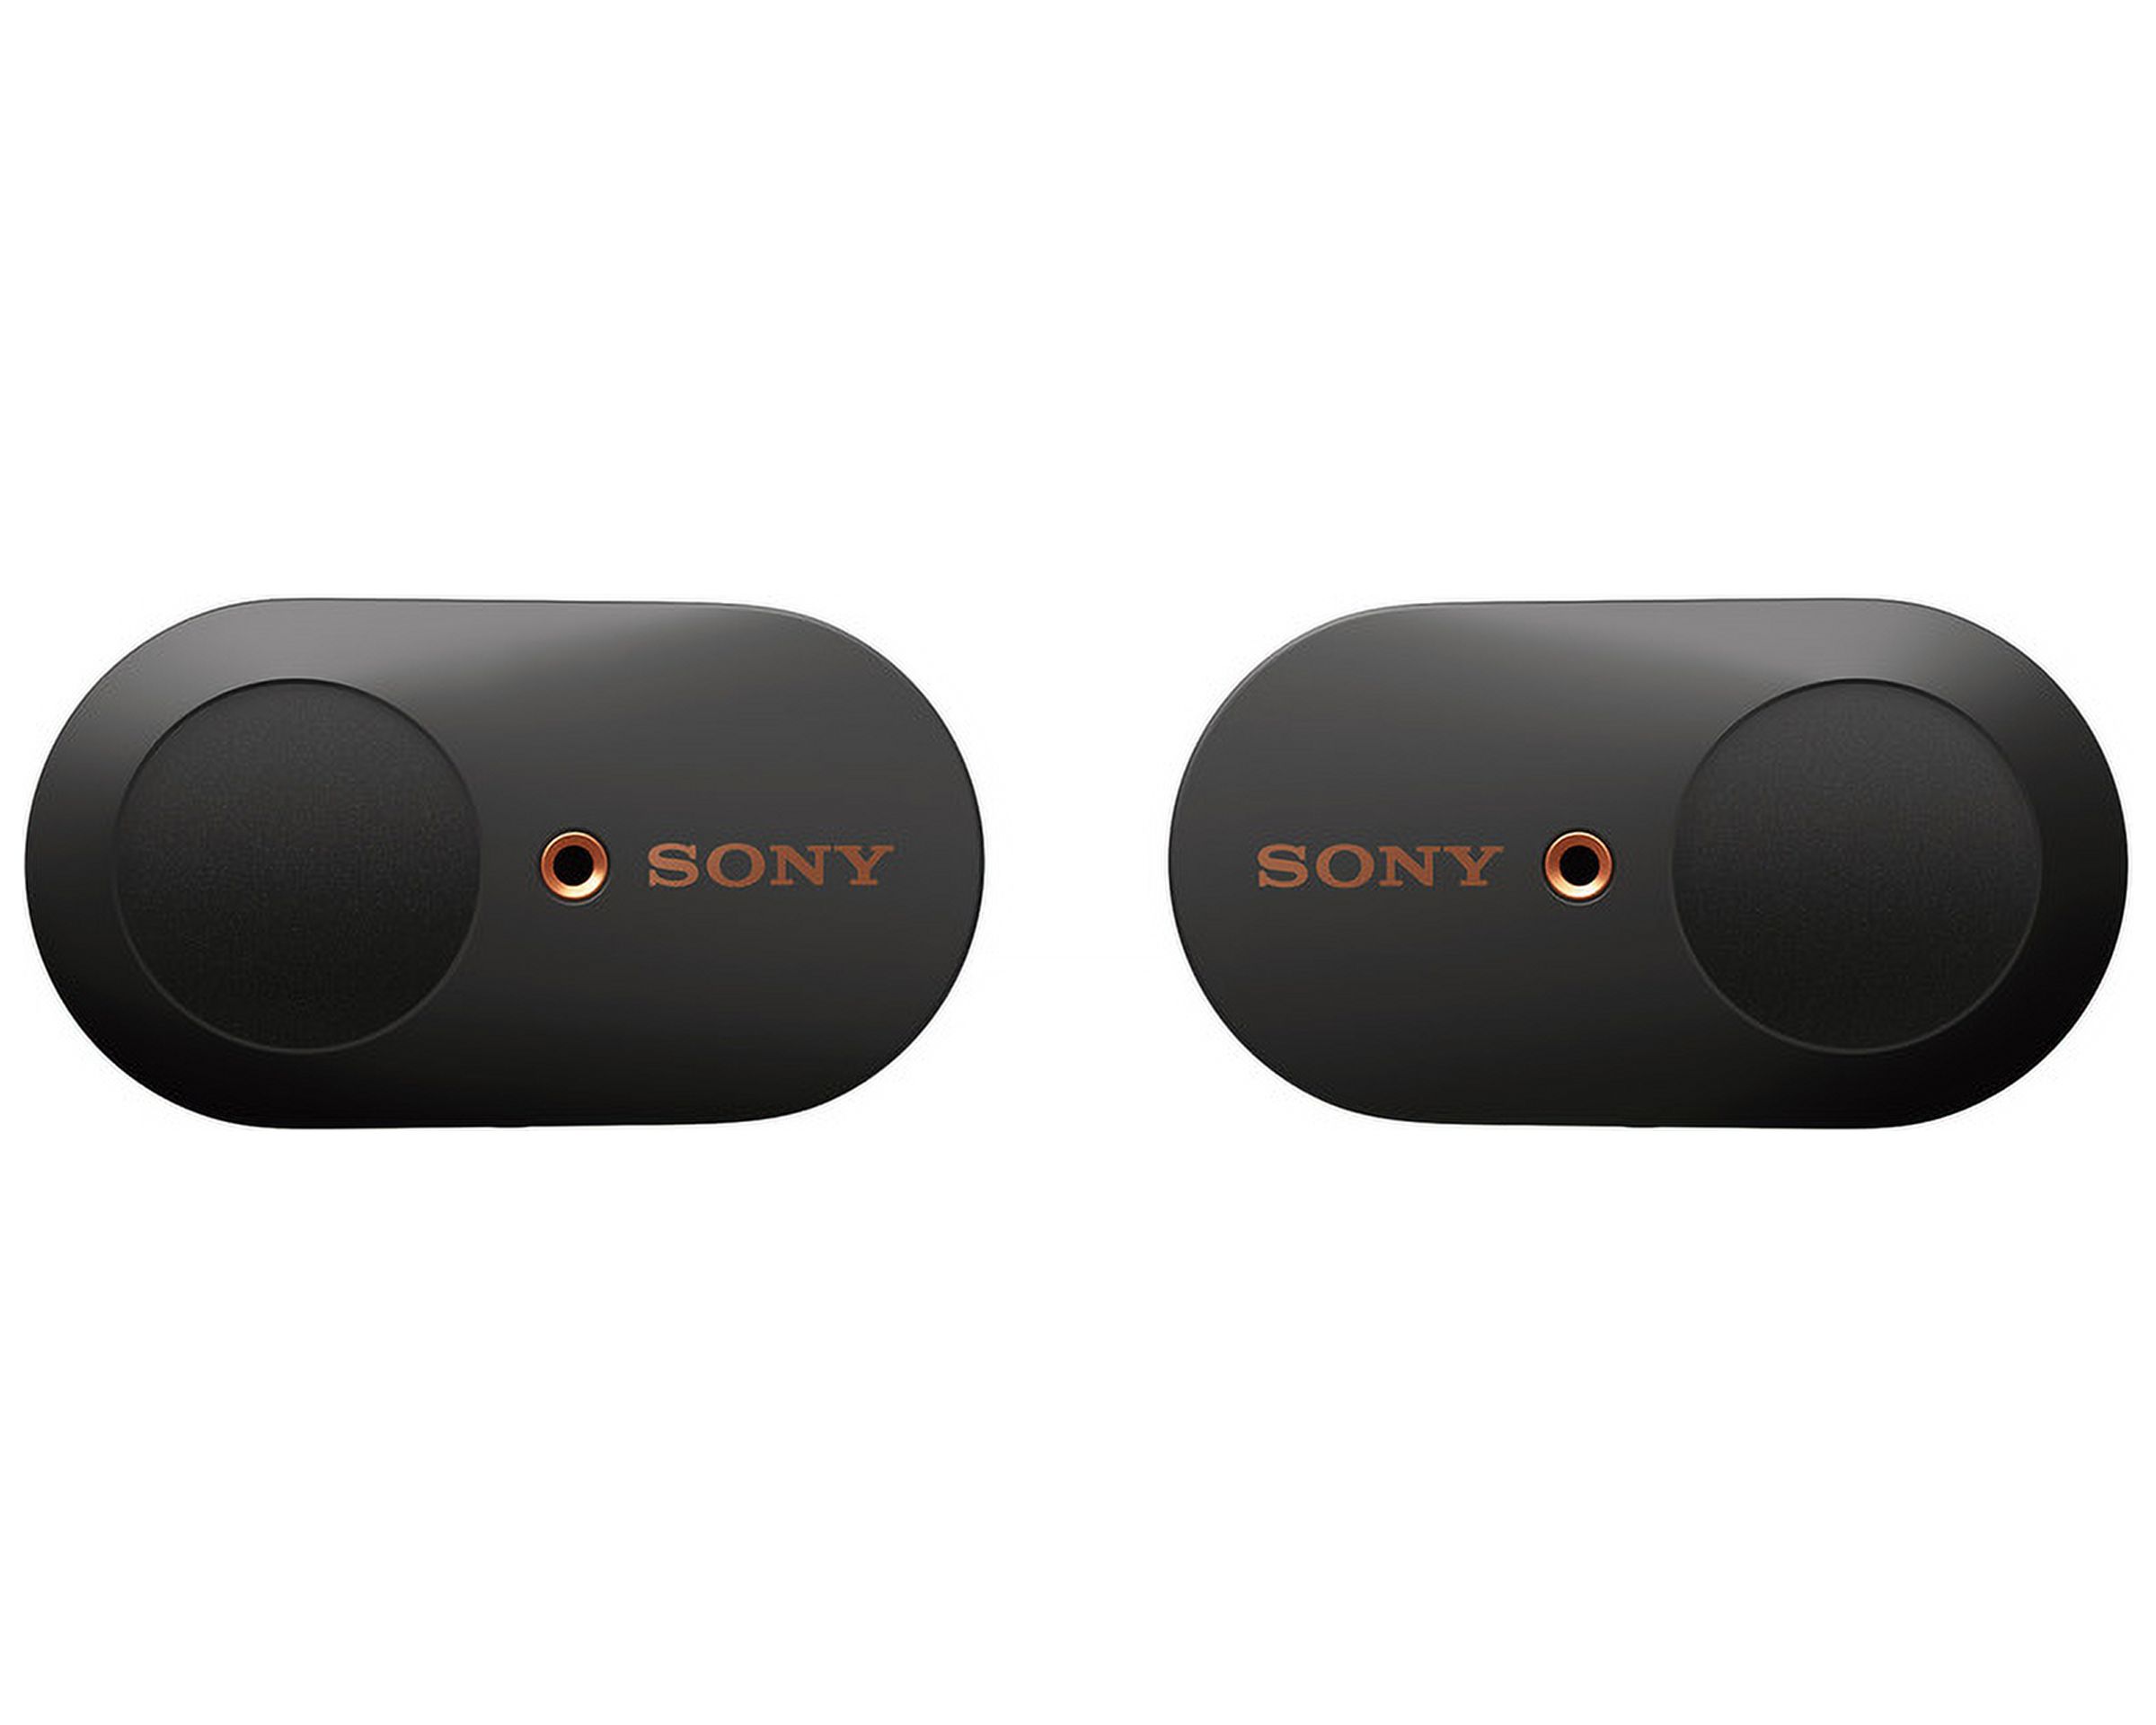 Sony WF-1000XM3 True Wireless Noise-Canceling Bluetooth Wireless Earbuds- Black - image 1 of 16